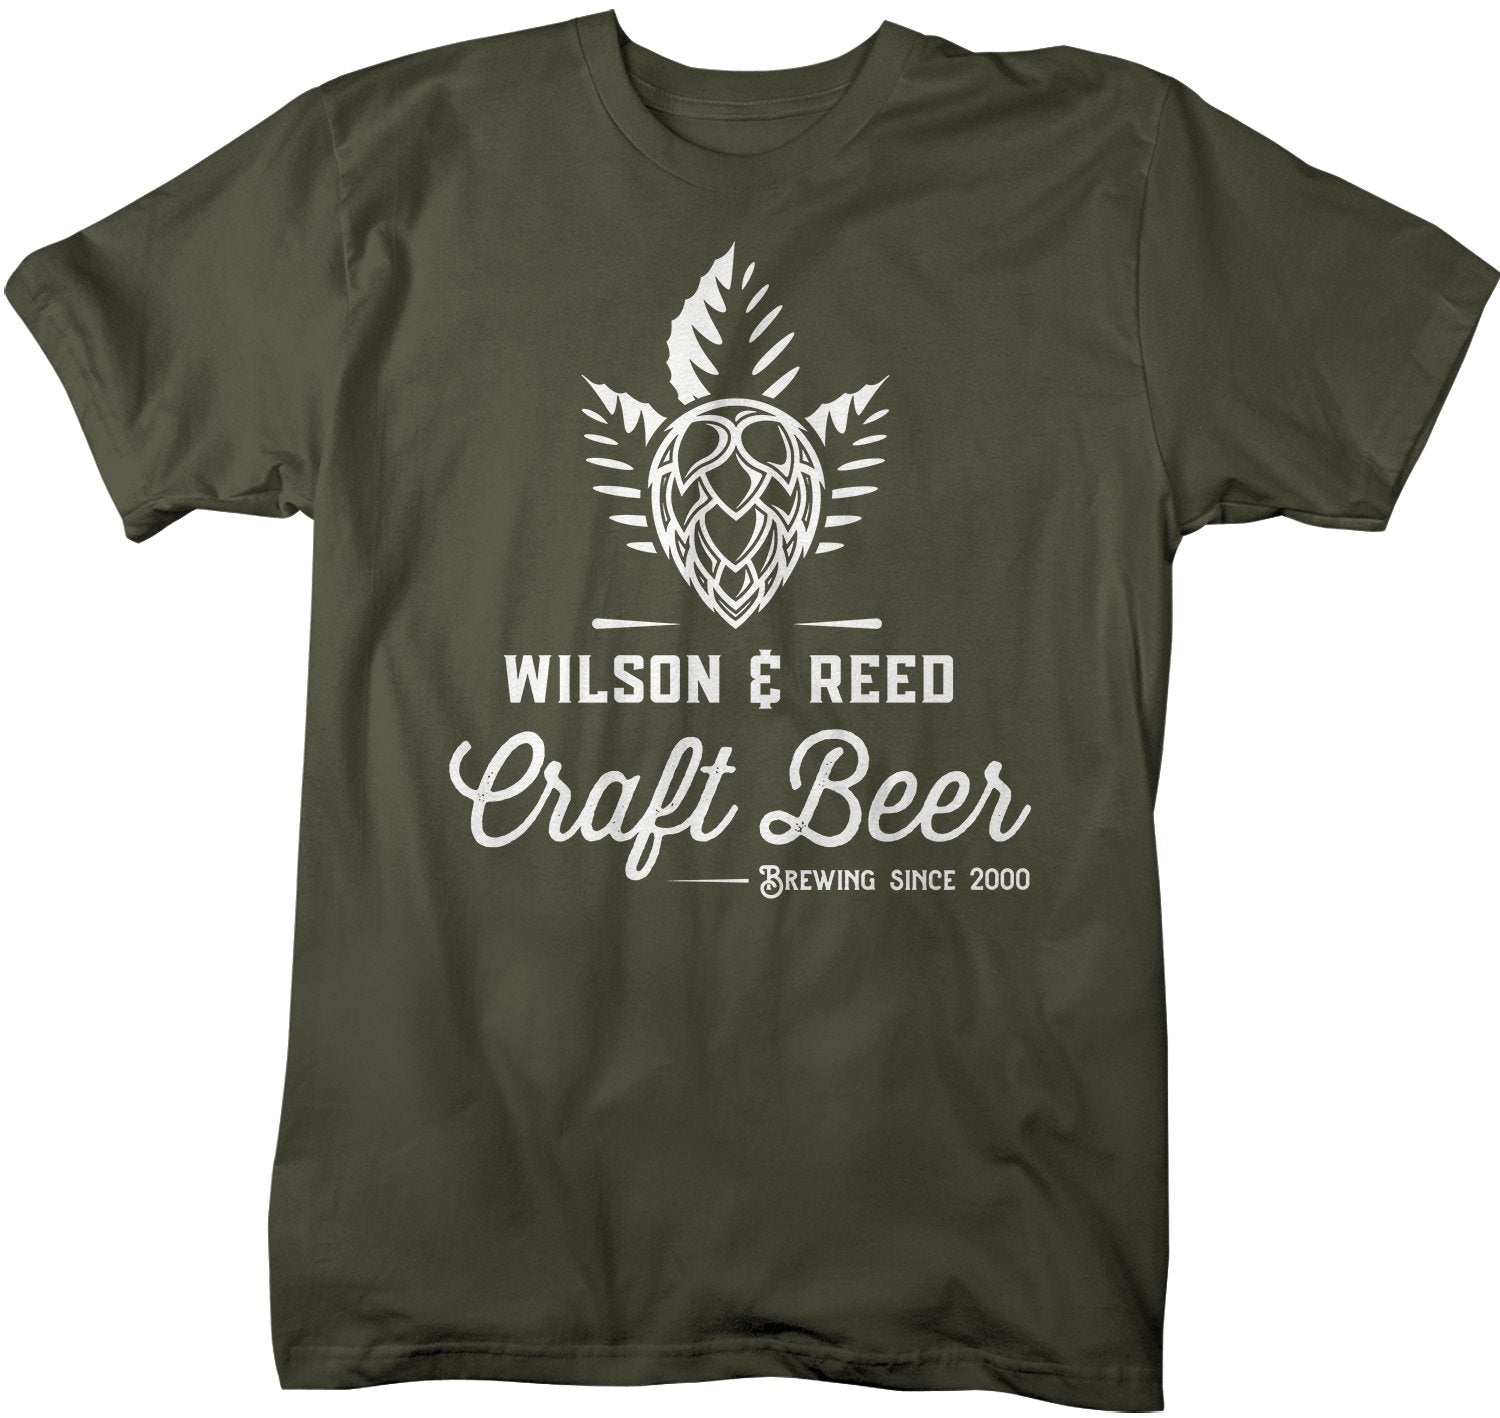 craft brewery shirts